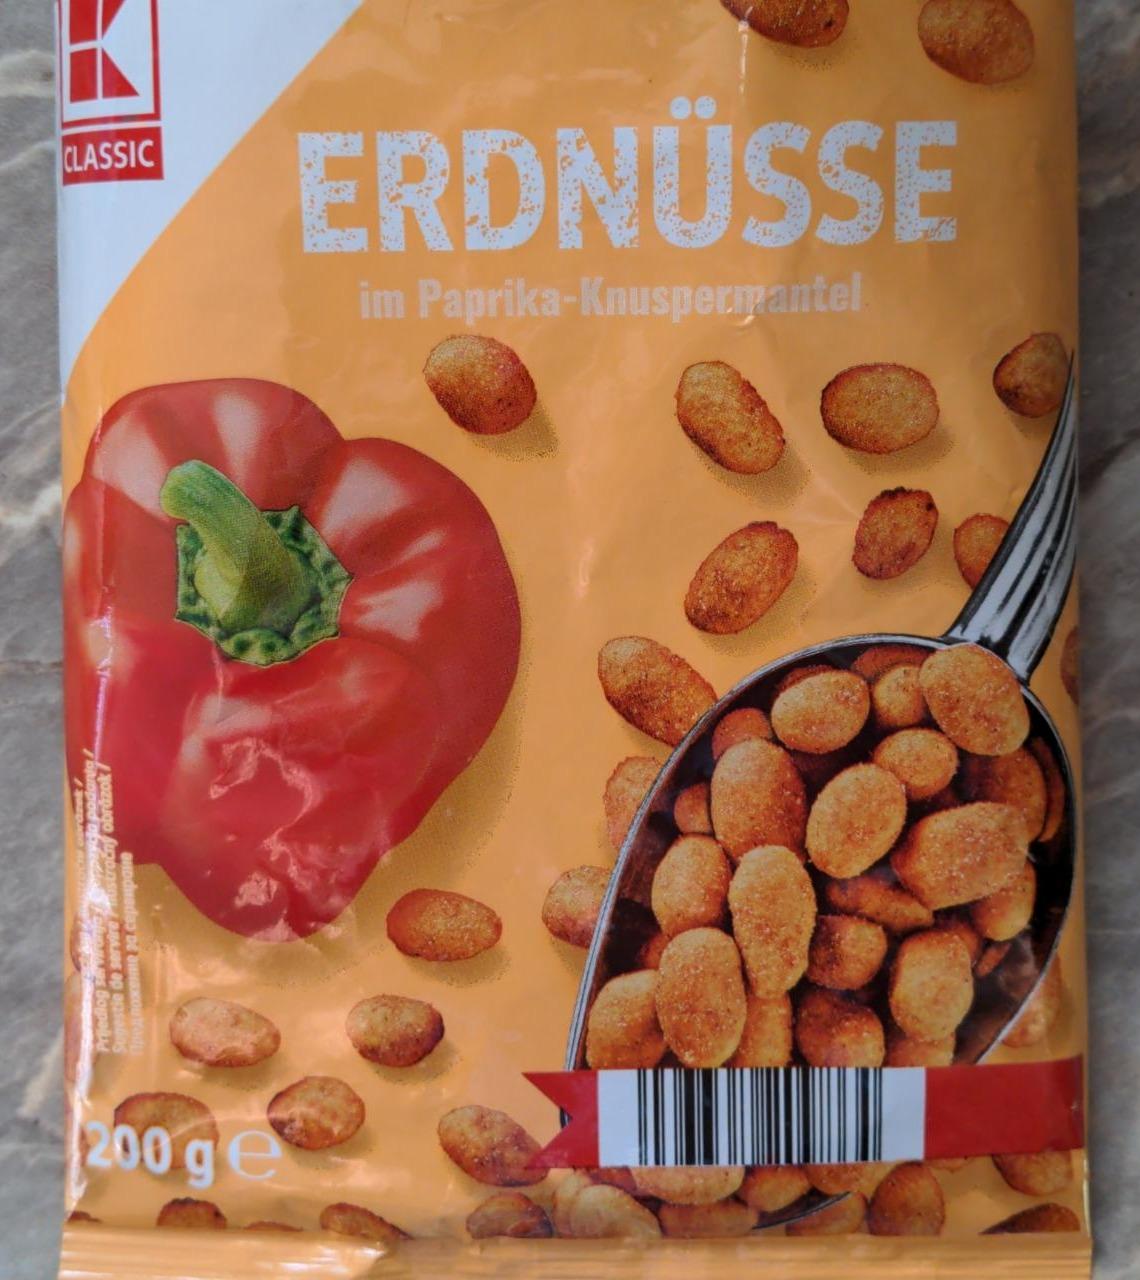 Zdjęcia - Erdnüsse im Paprika-Knuspermantel K-Classic